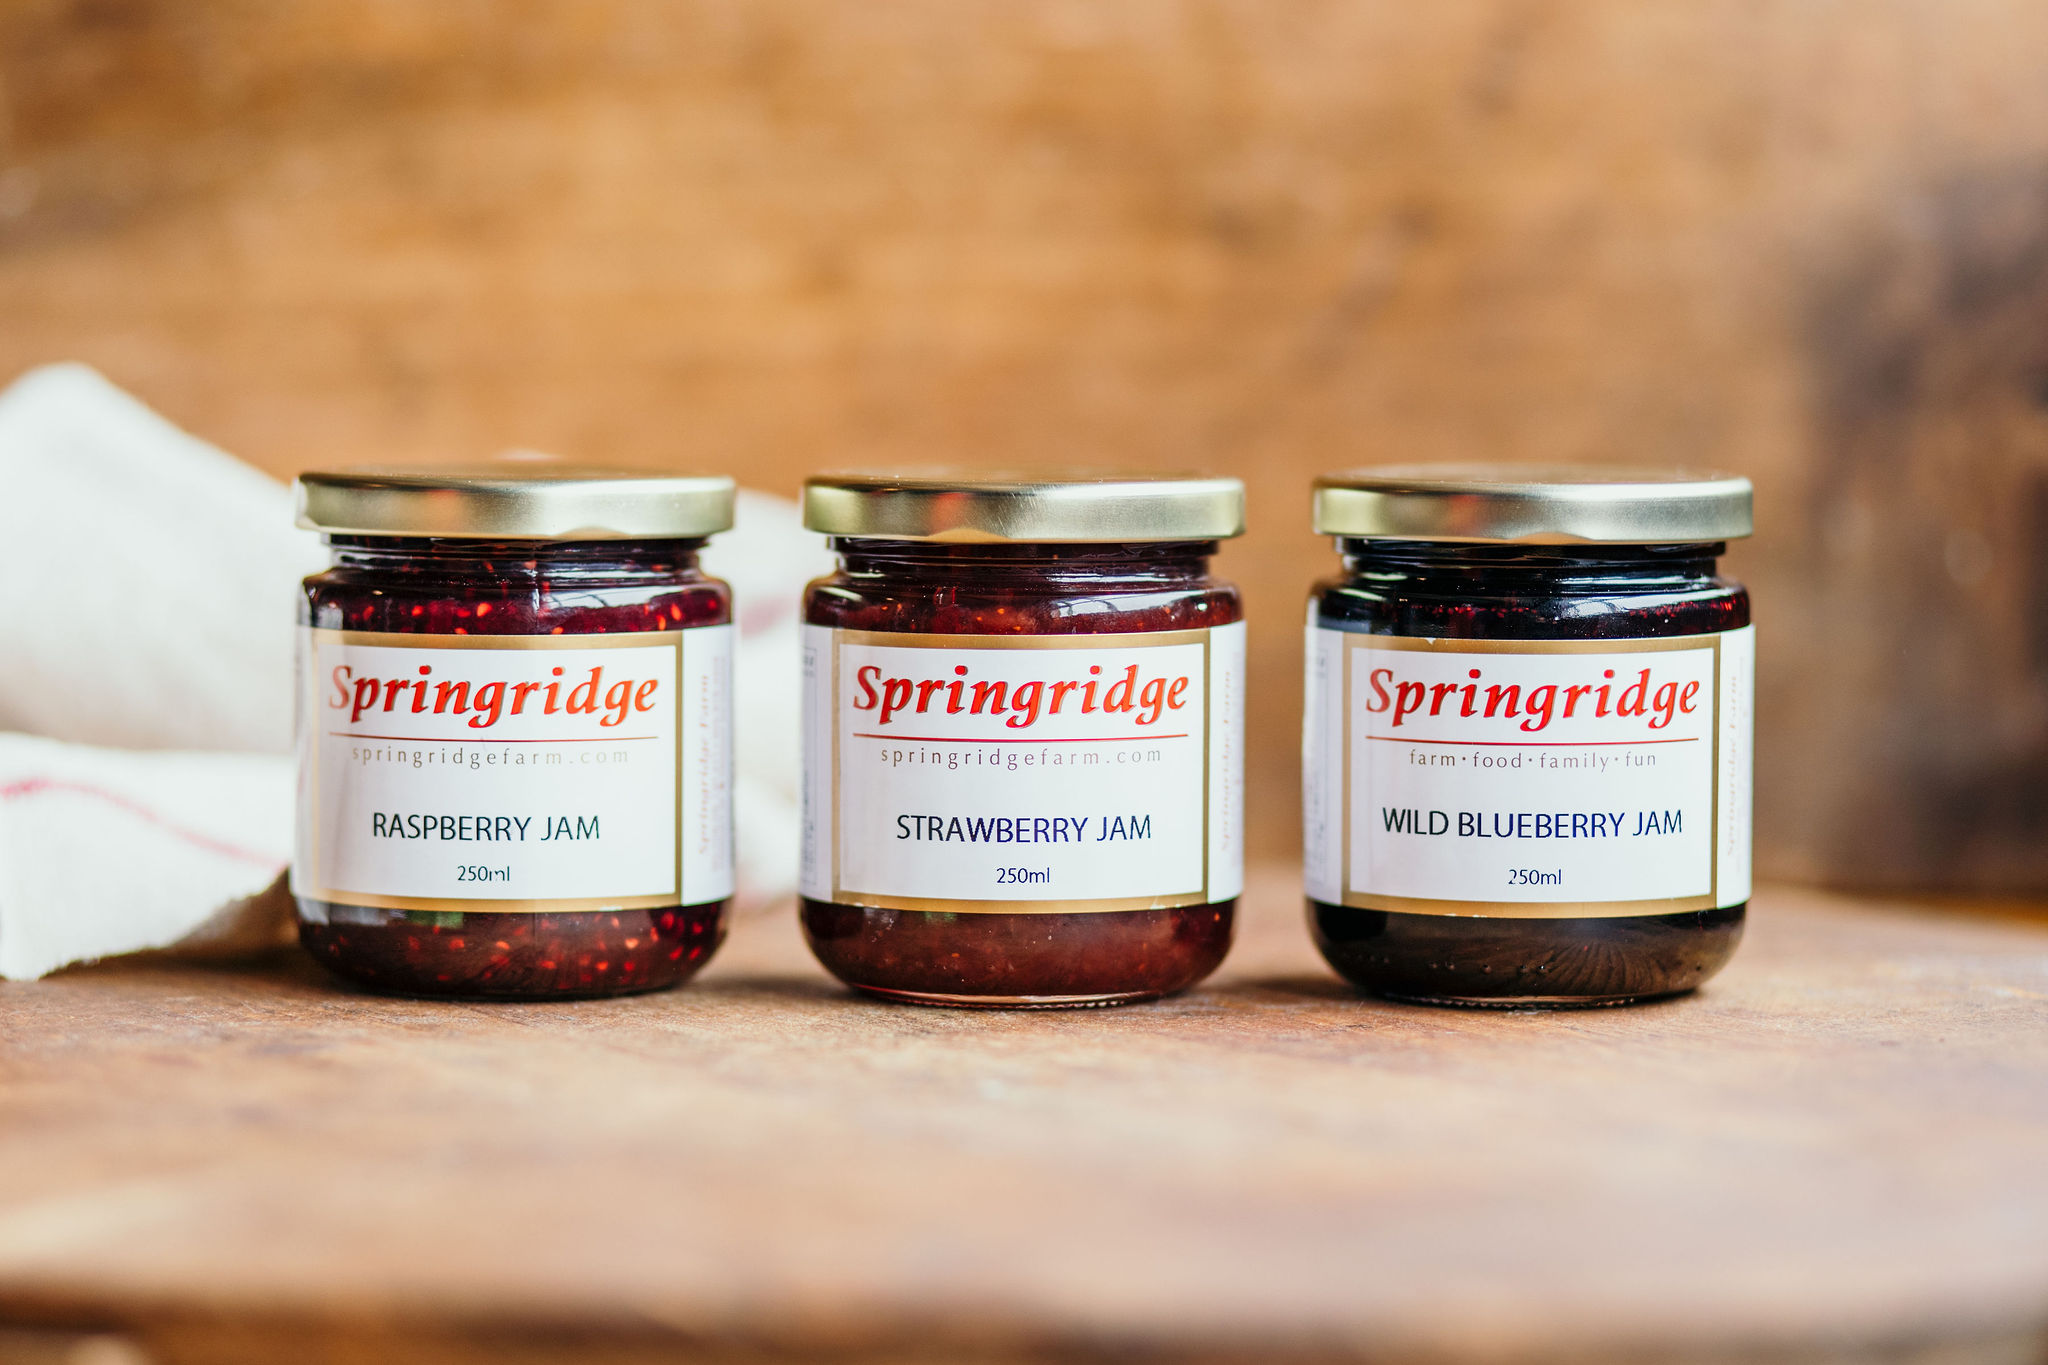 3 jars of jam in a row from Springridge farm - raspberry, strawberry and wild blueberry.